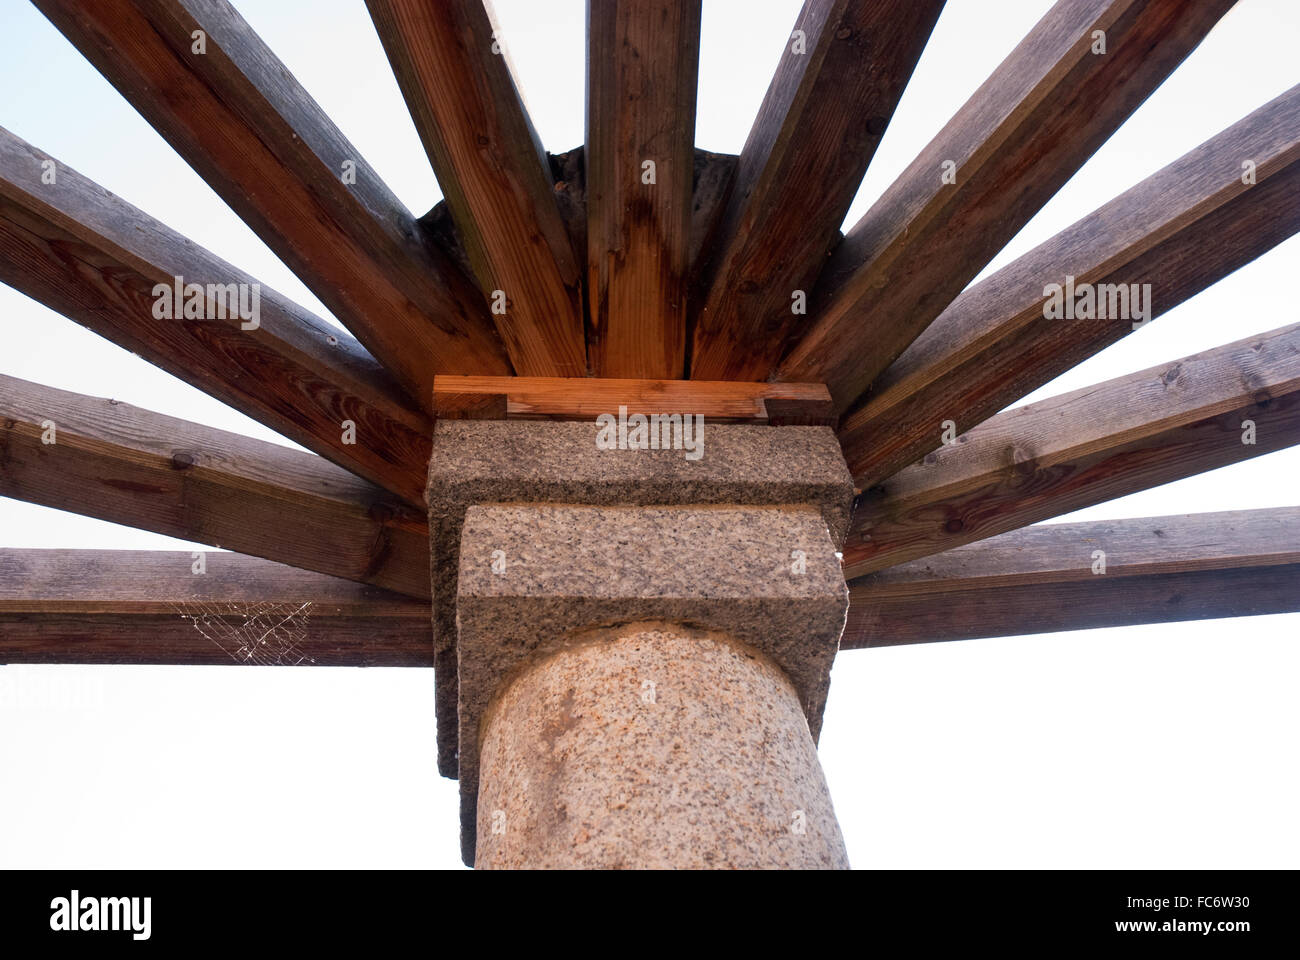 column with wooden beams atop Stock Photo